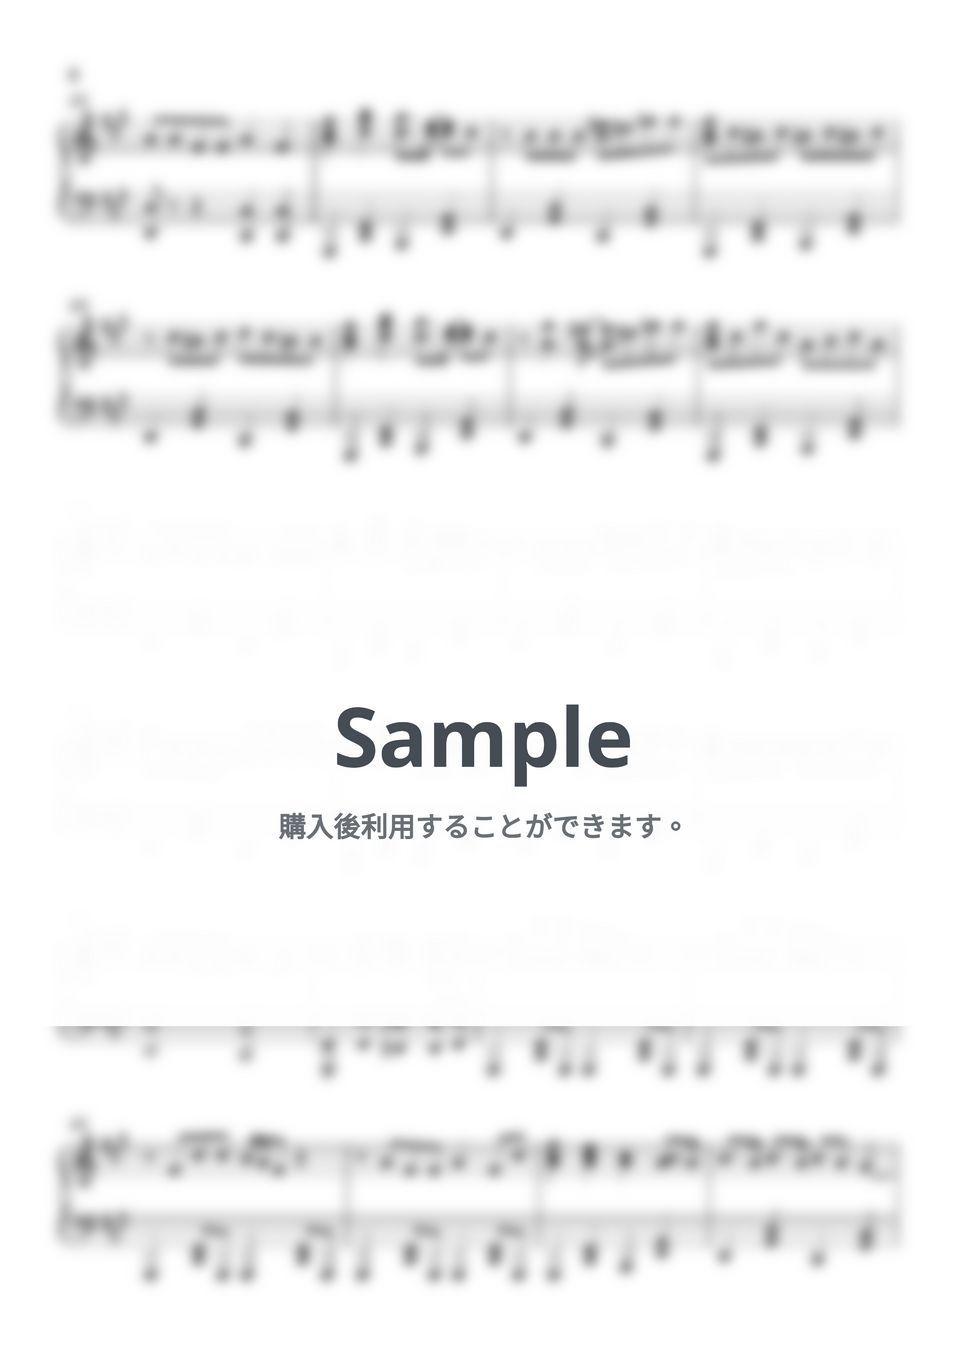 King Gnu - SPECIALZ (ピアノ楽譜 / 初級) by Piano Lovers. jp